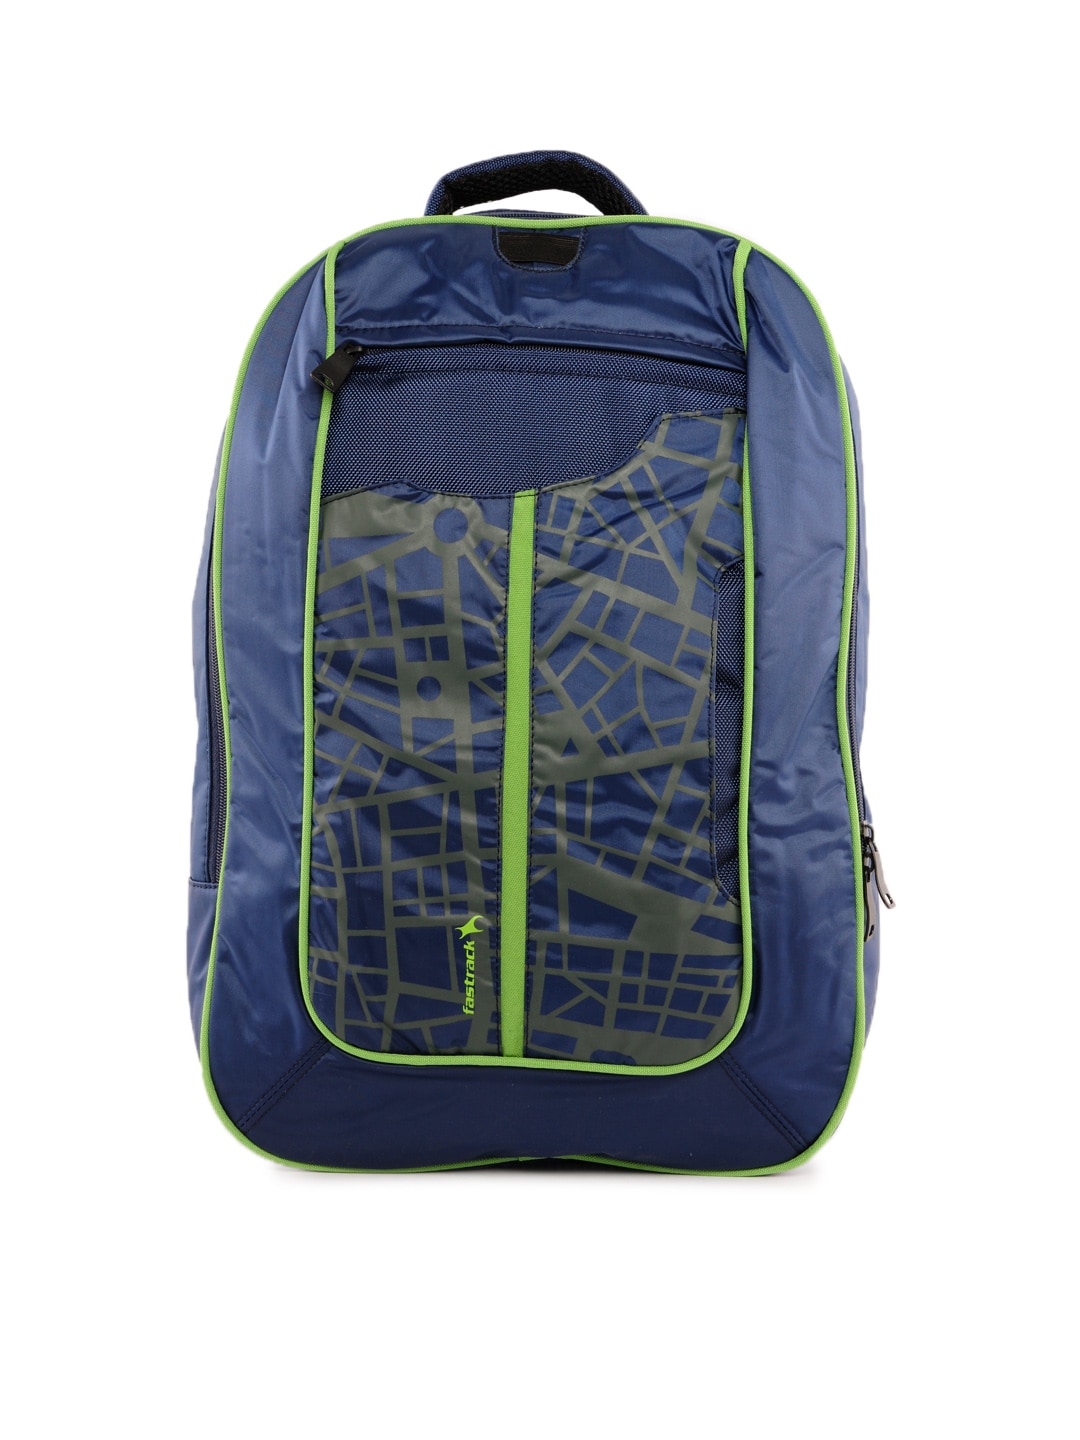 Fastrack Unisex Blue Backpack